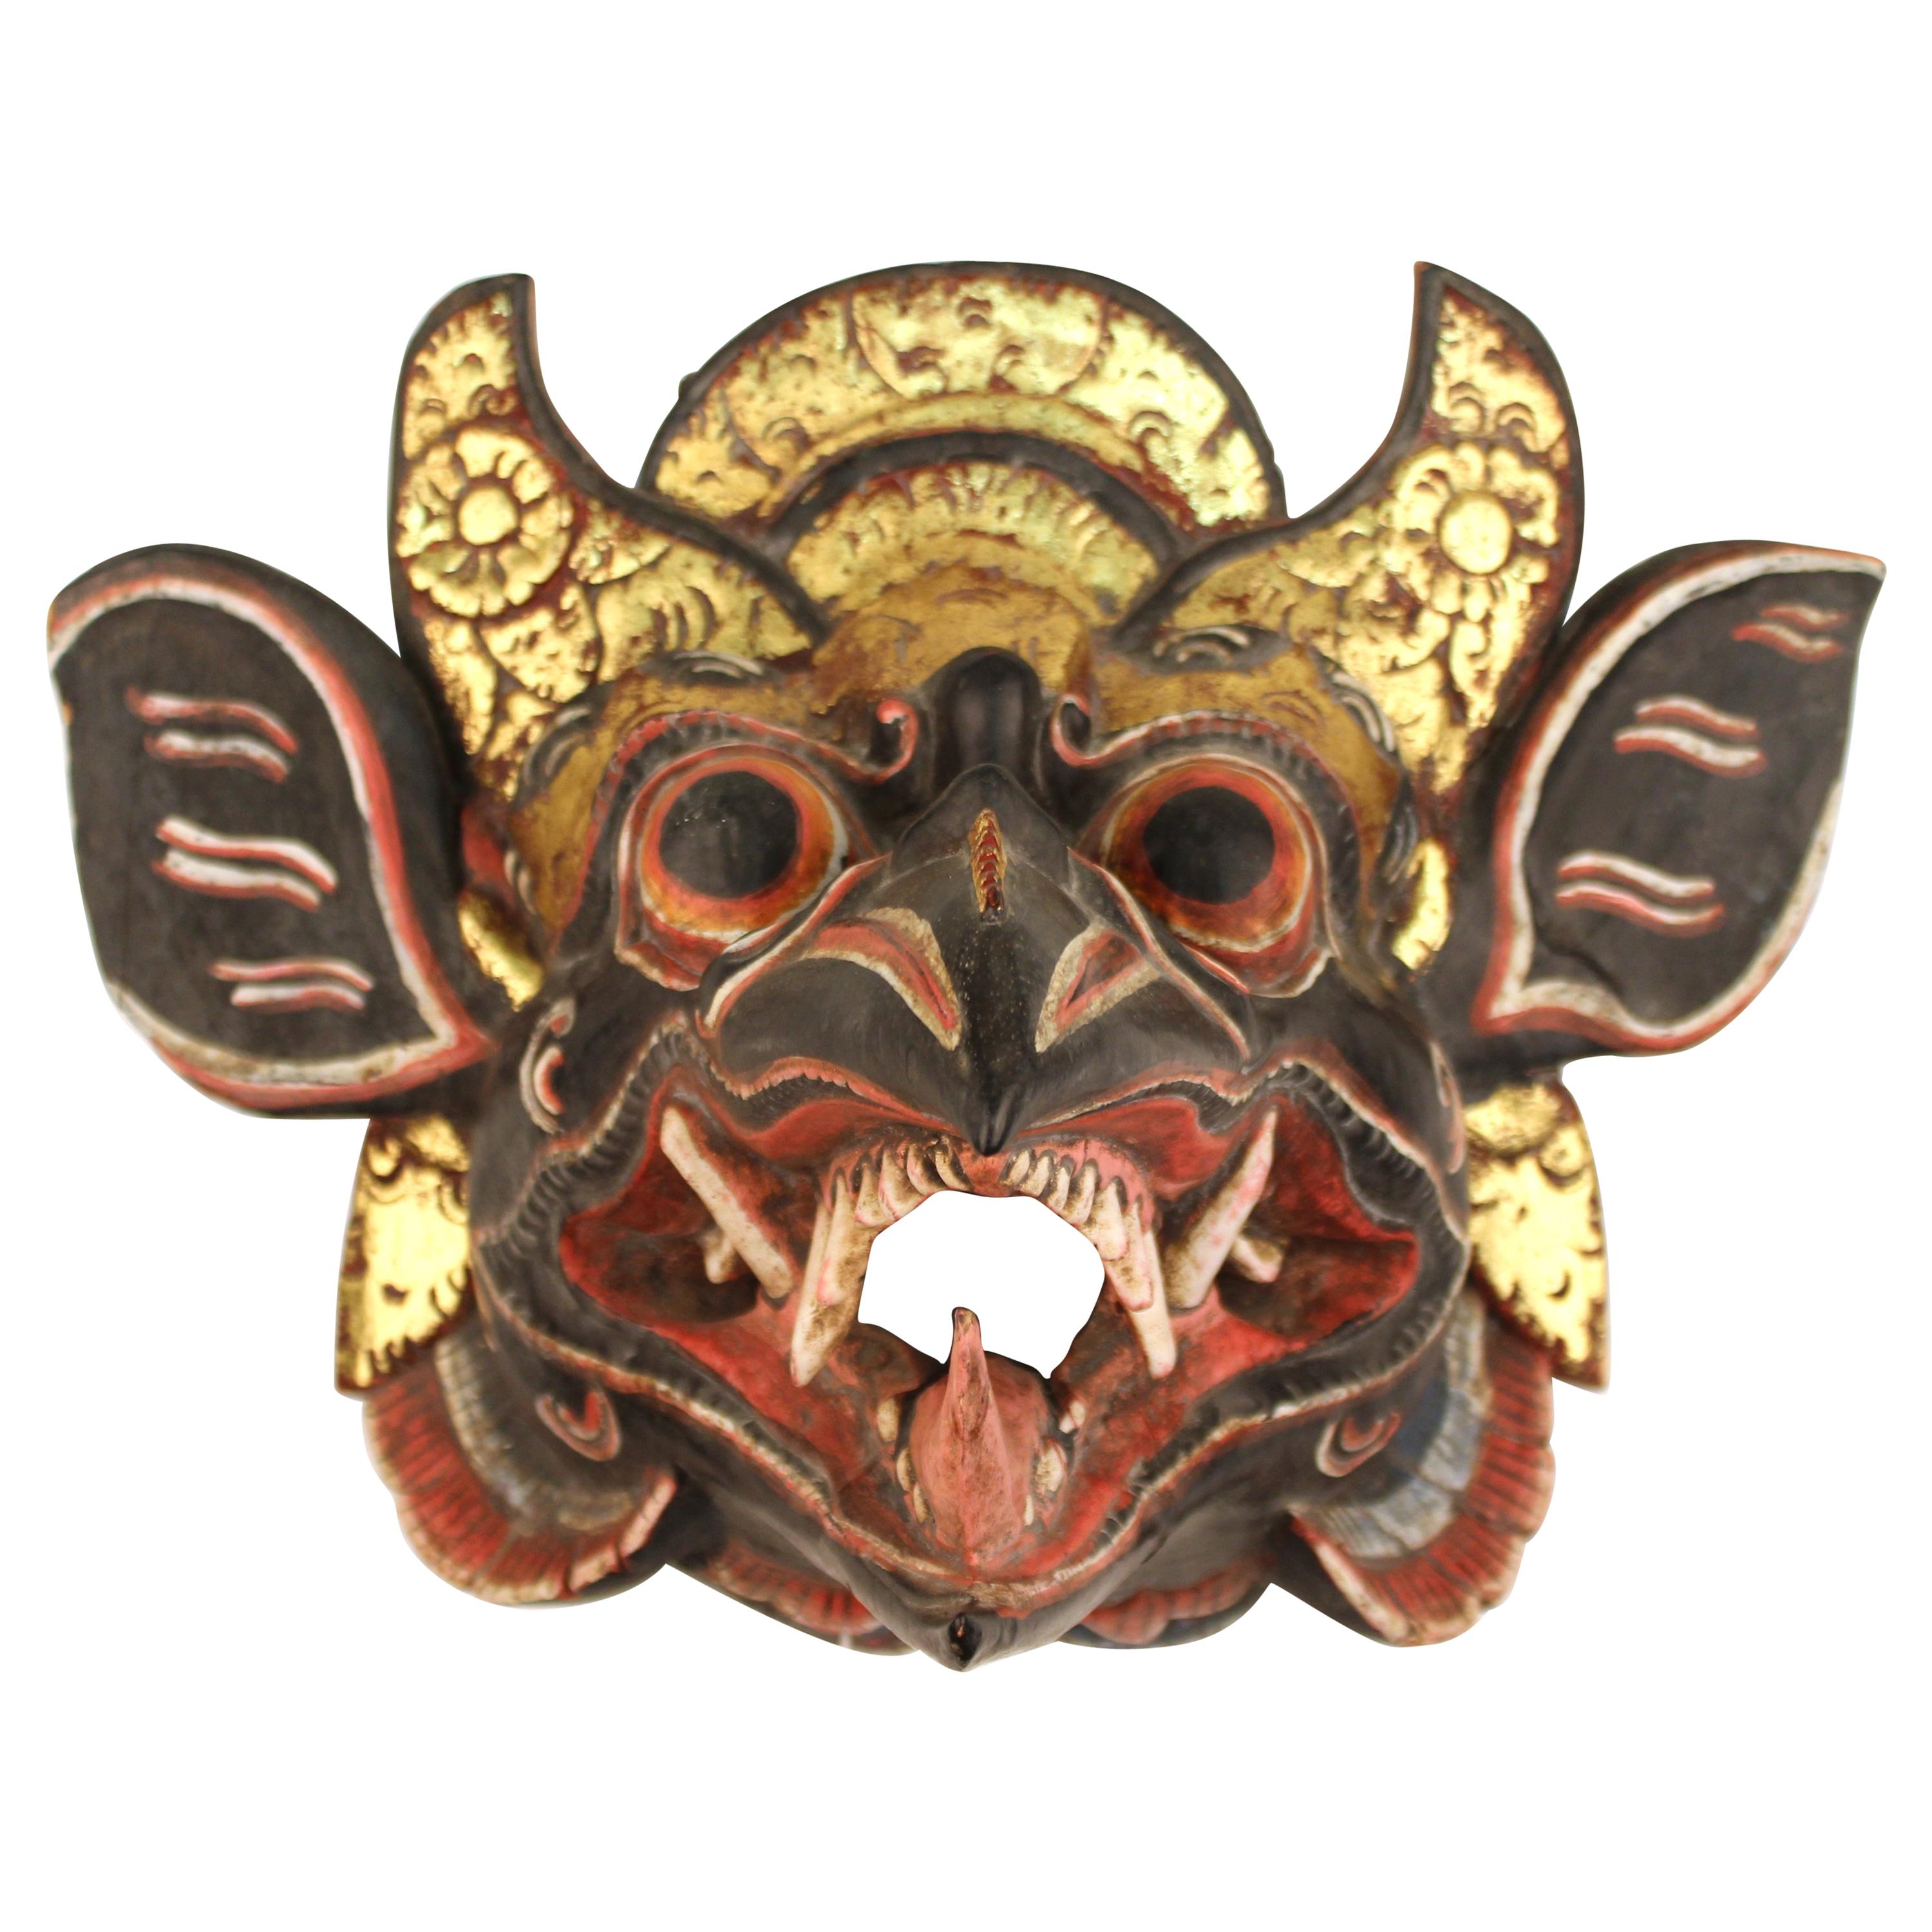 Balinese Barong Dance Mask of Garuda, the Vehicle of Vishnu